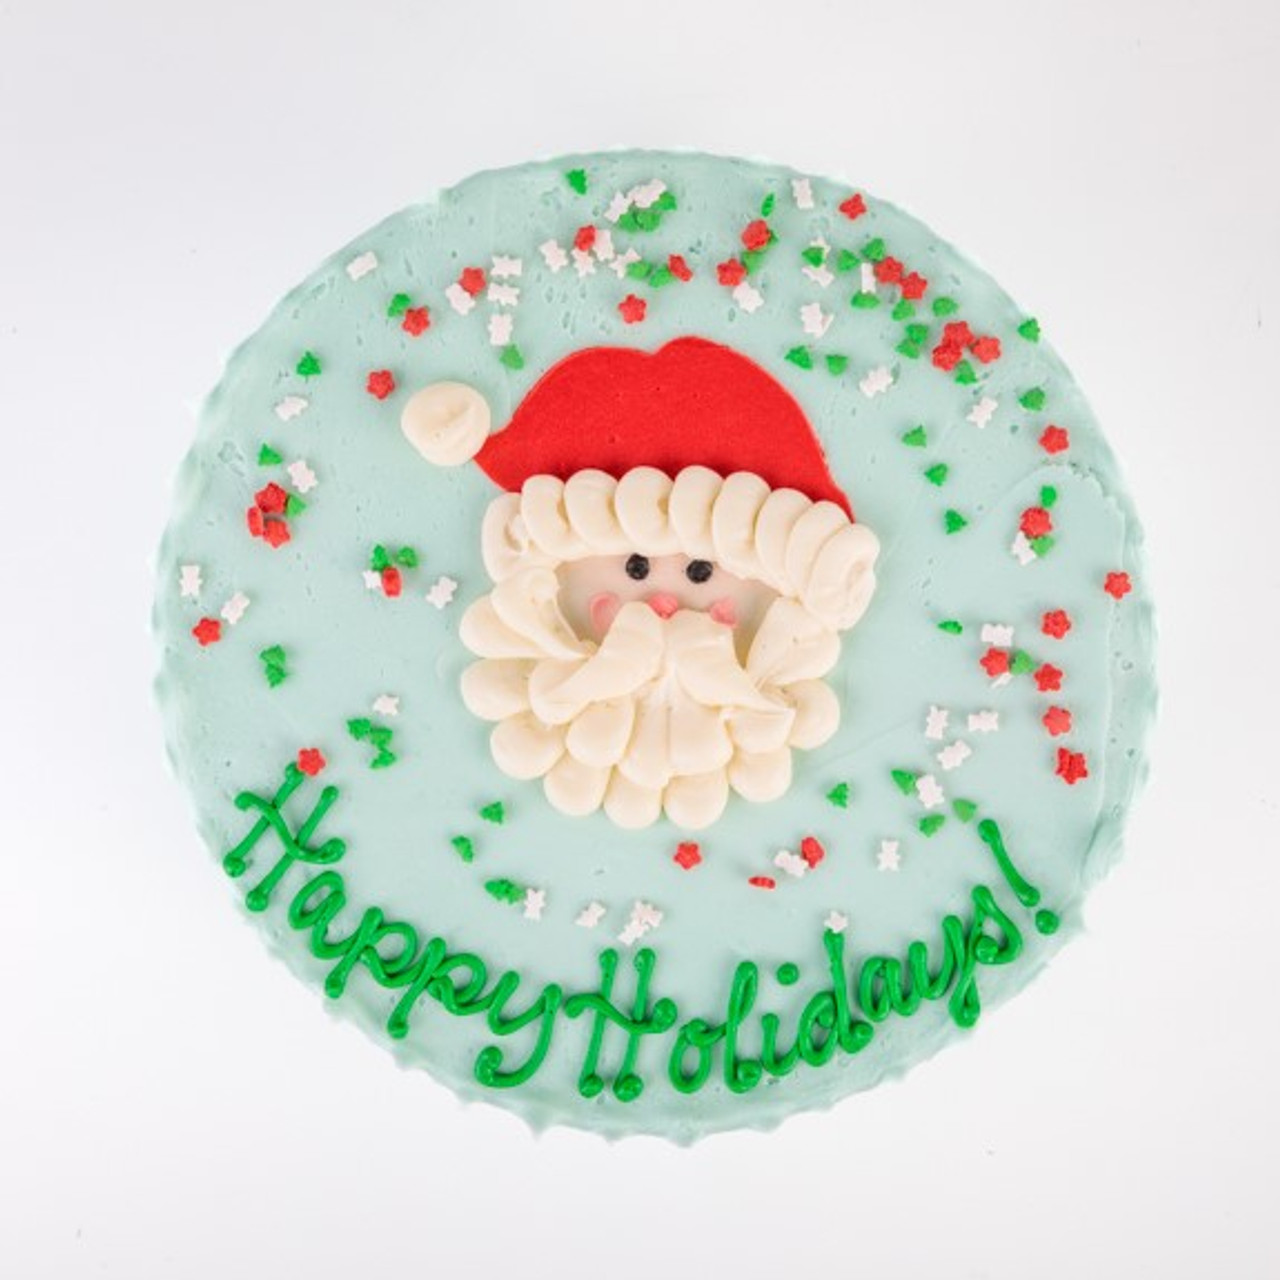 Jolly Santa Christmas cake | GoodtoKnow